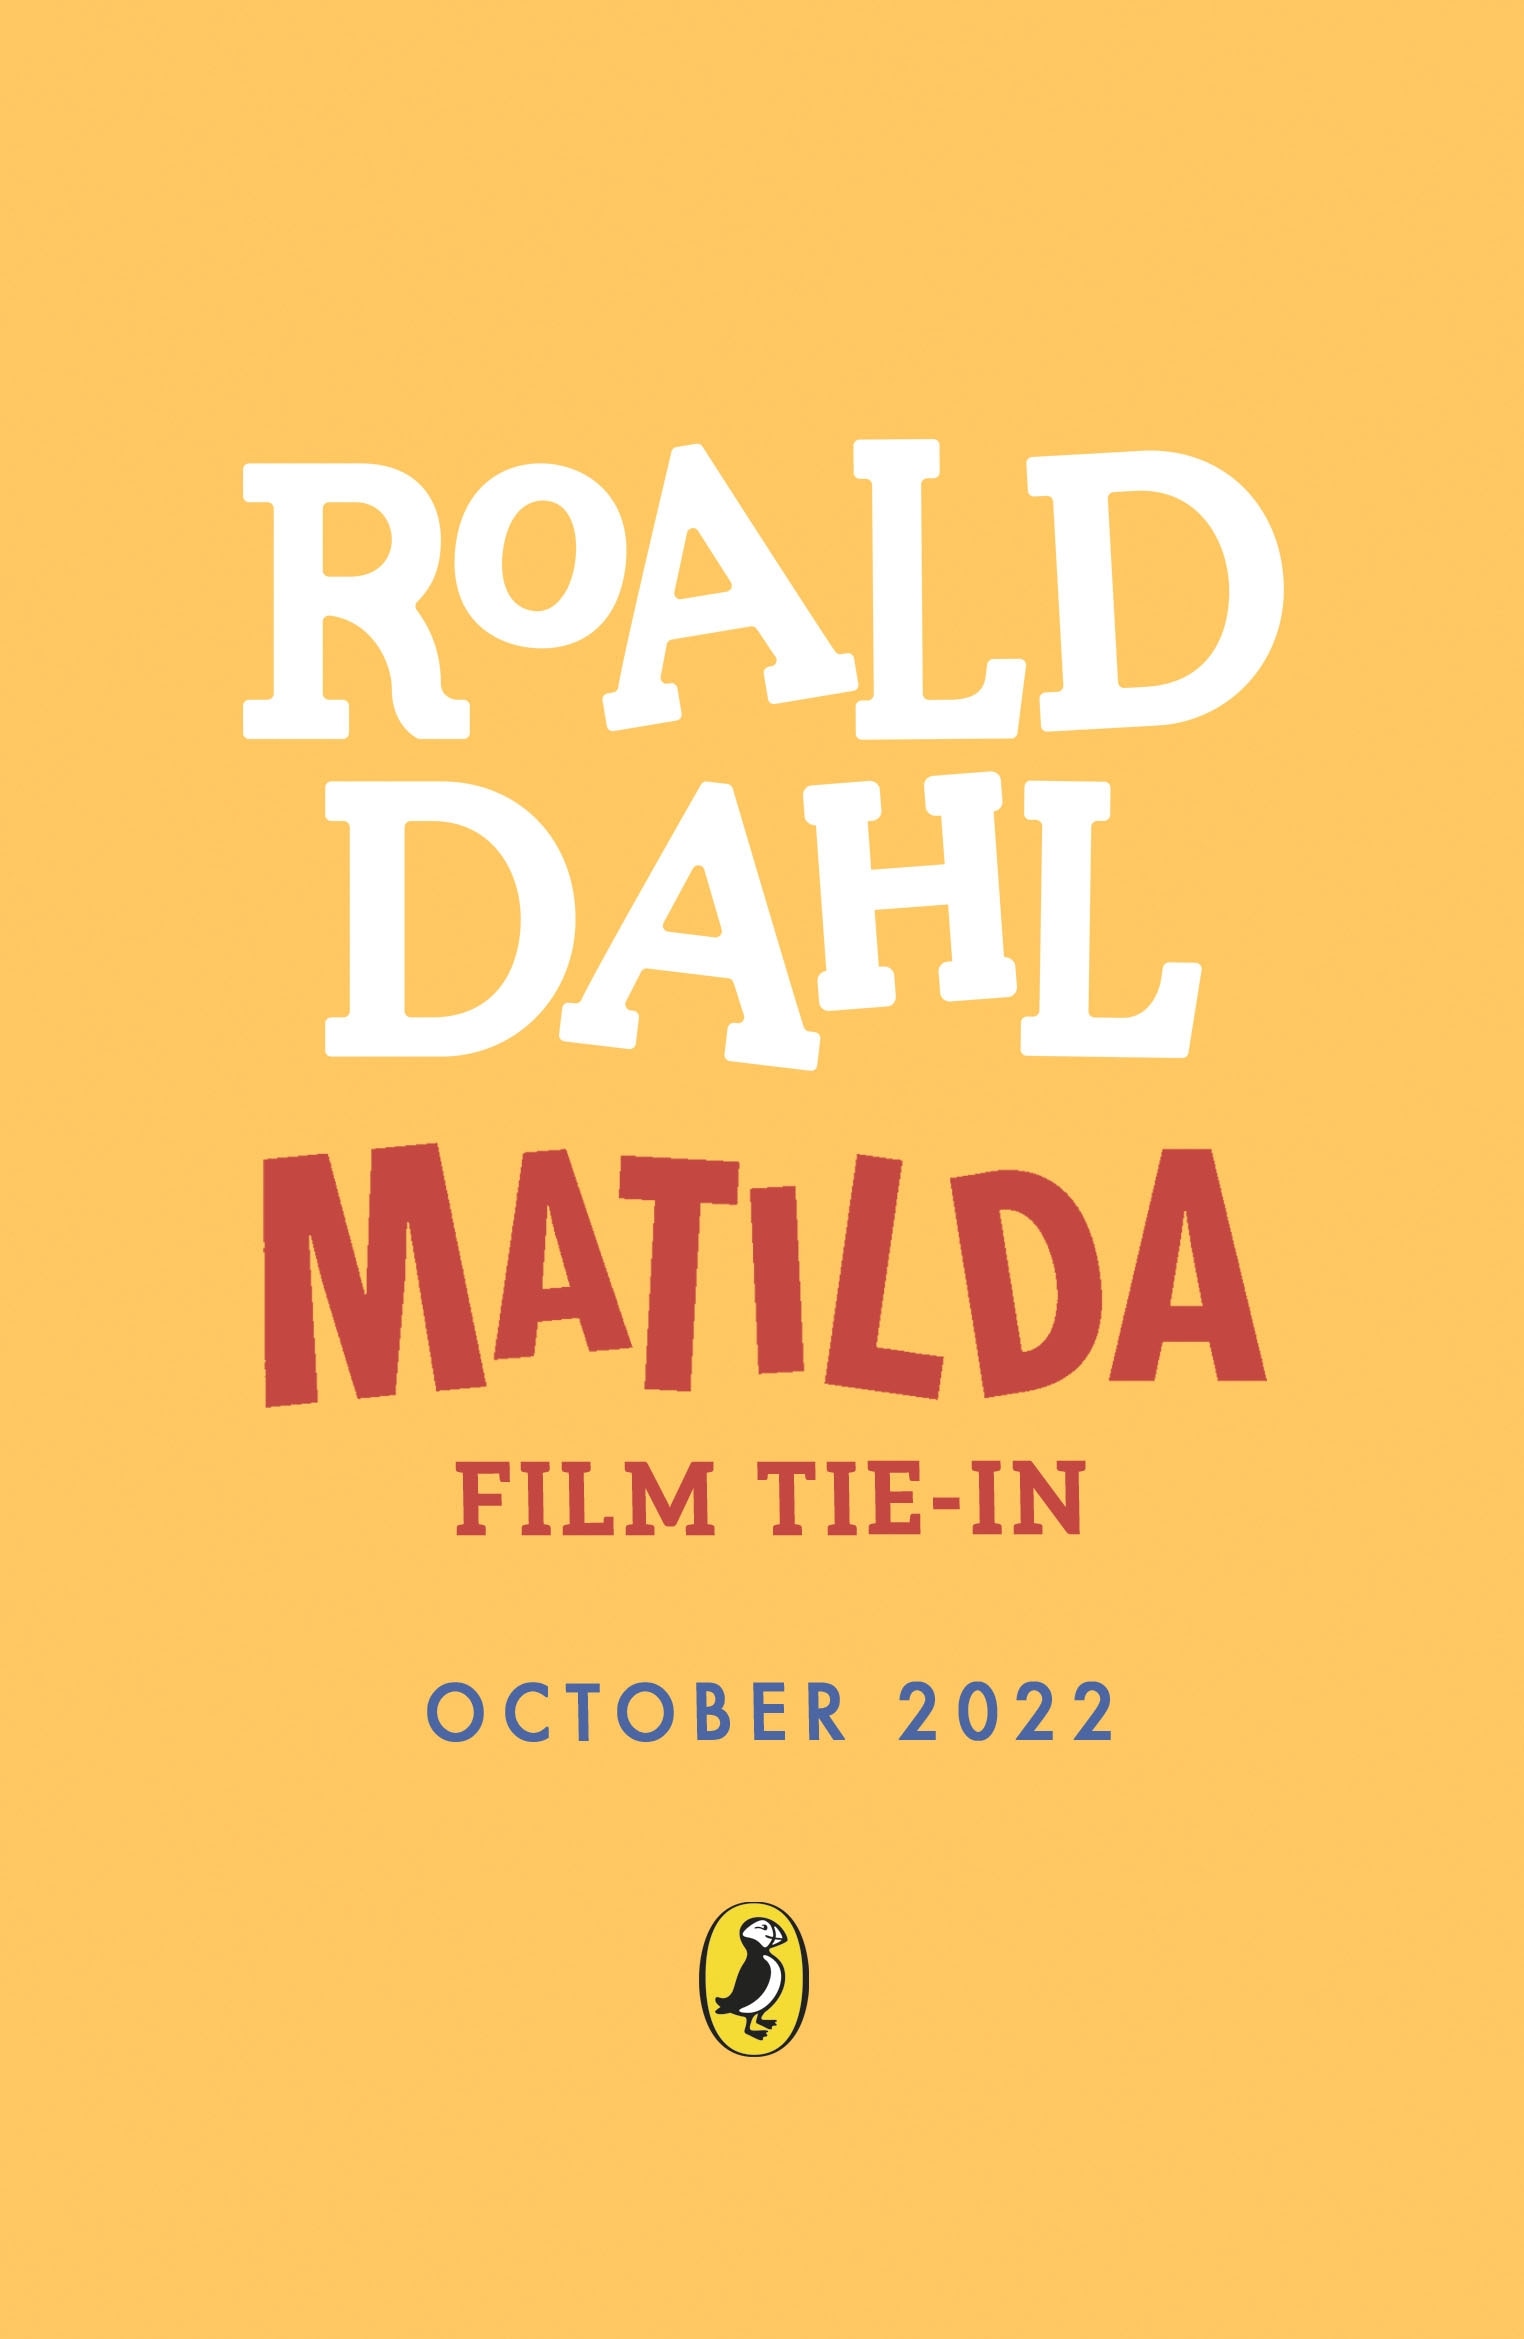 Book “Matilda” by Roald Dahl — October 13, 2022